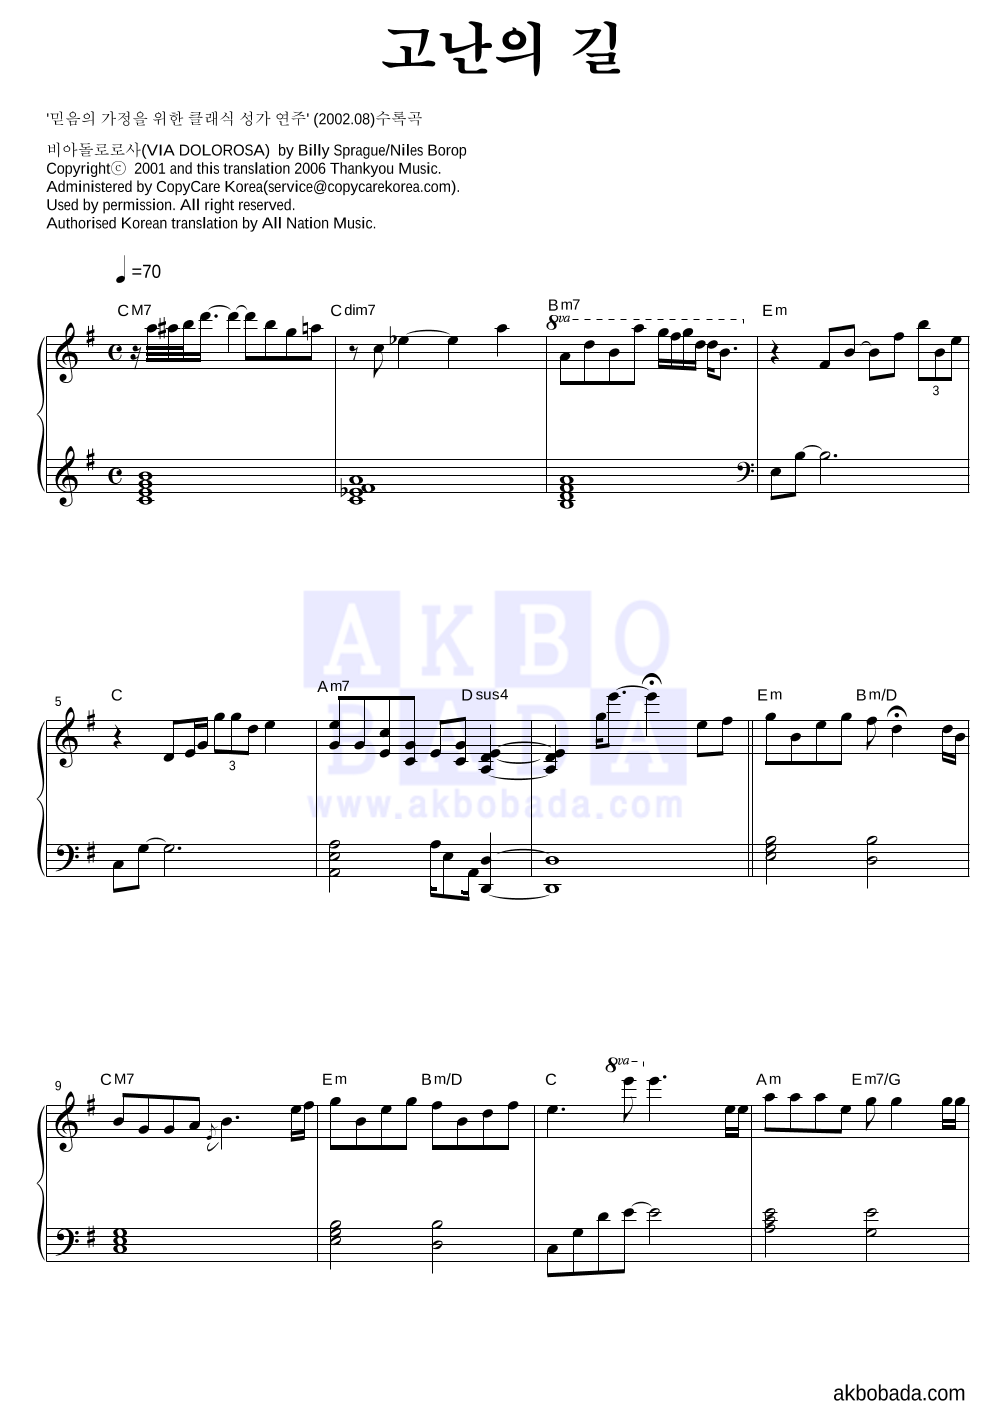 CCM - 비아돌로로사 (VIA DOLOROSA) (Piano Ver.) 피아노 2단 악보 